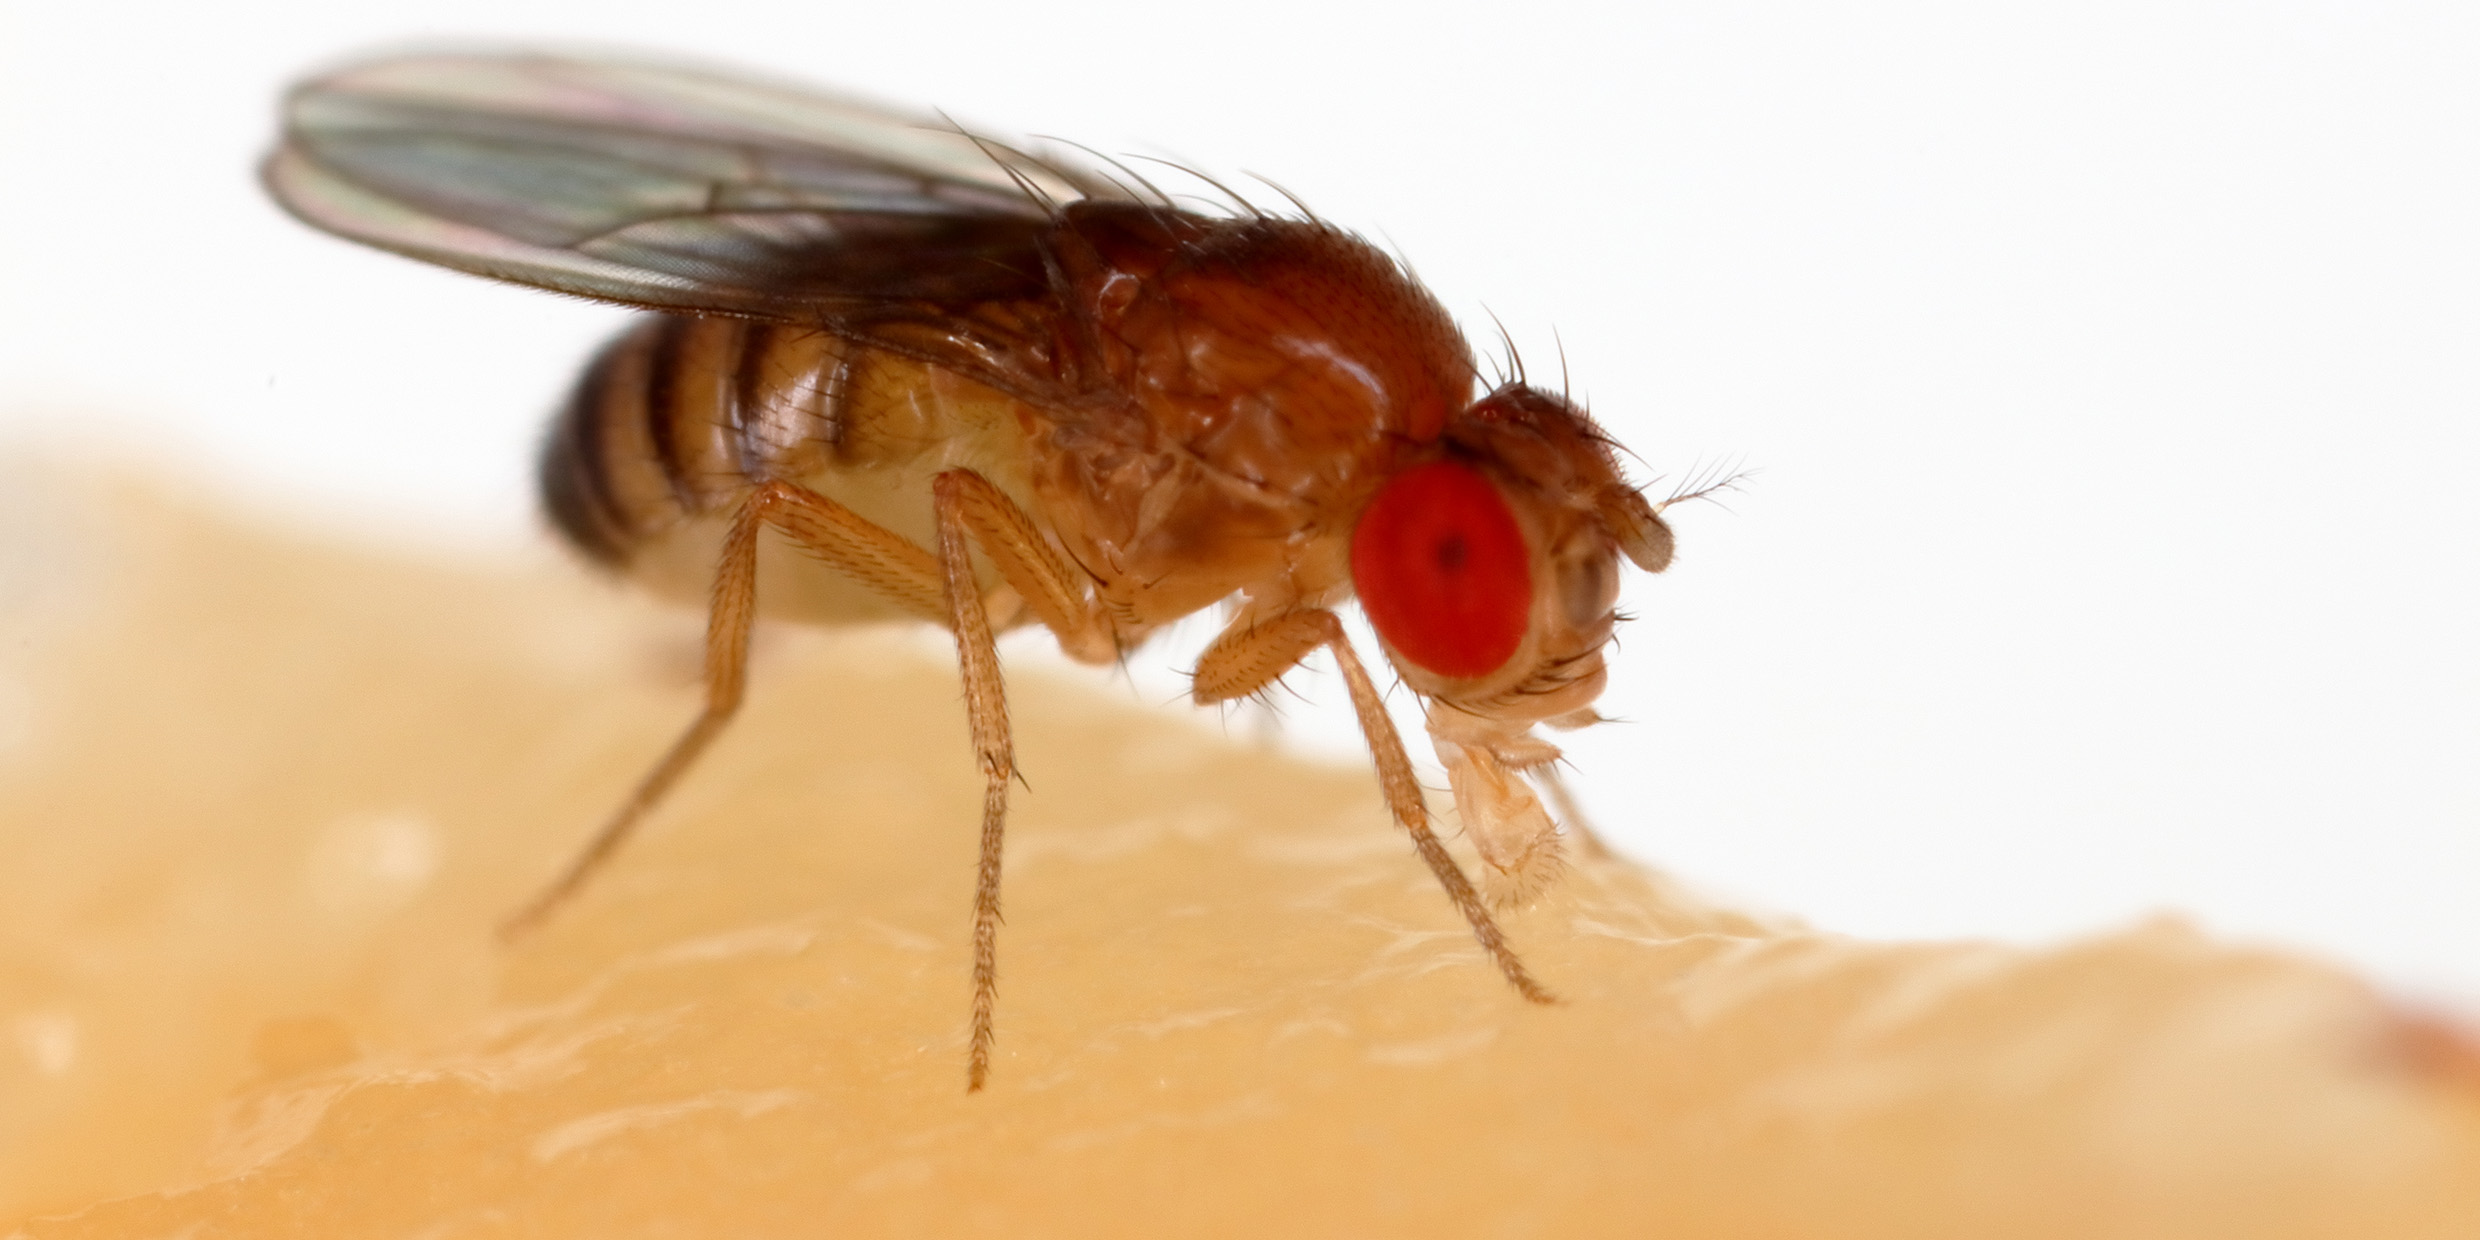 Close-up image of a fruit fly feeding on a banana